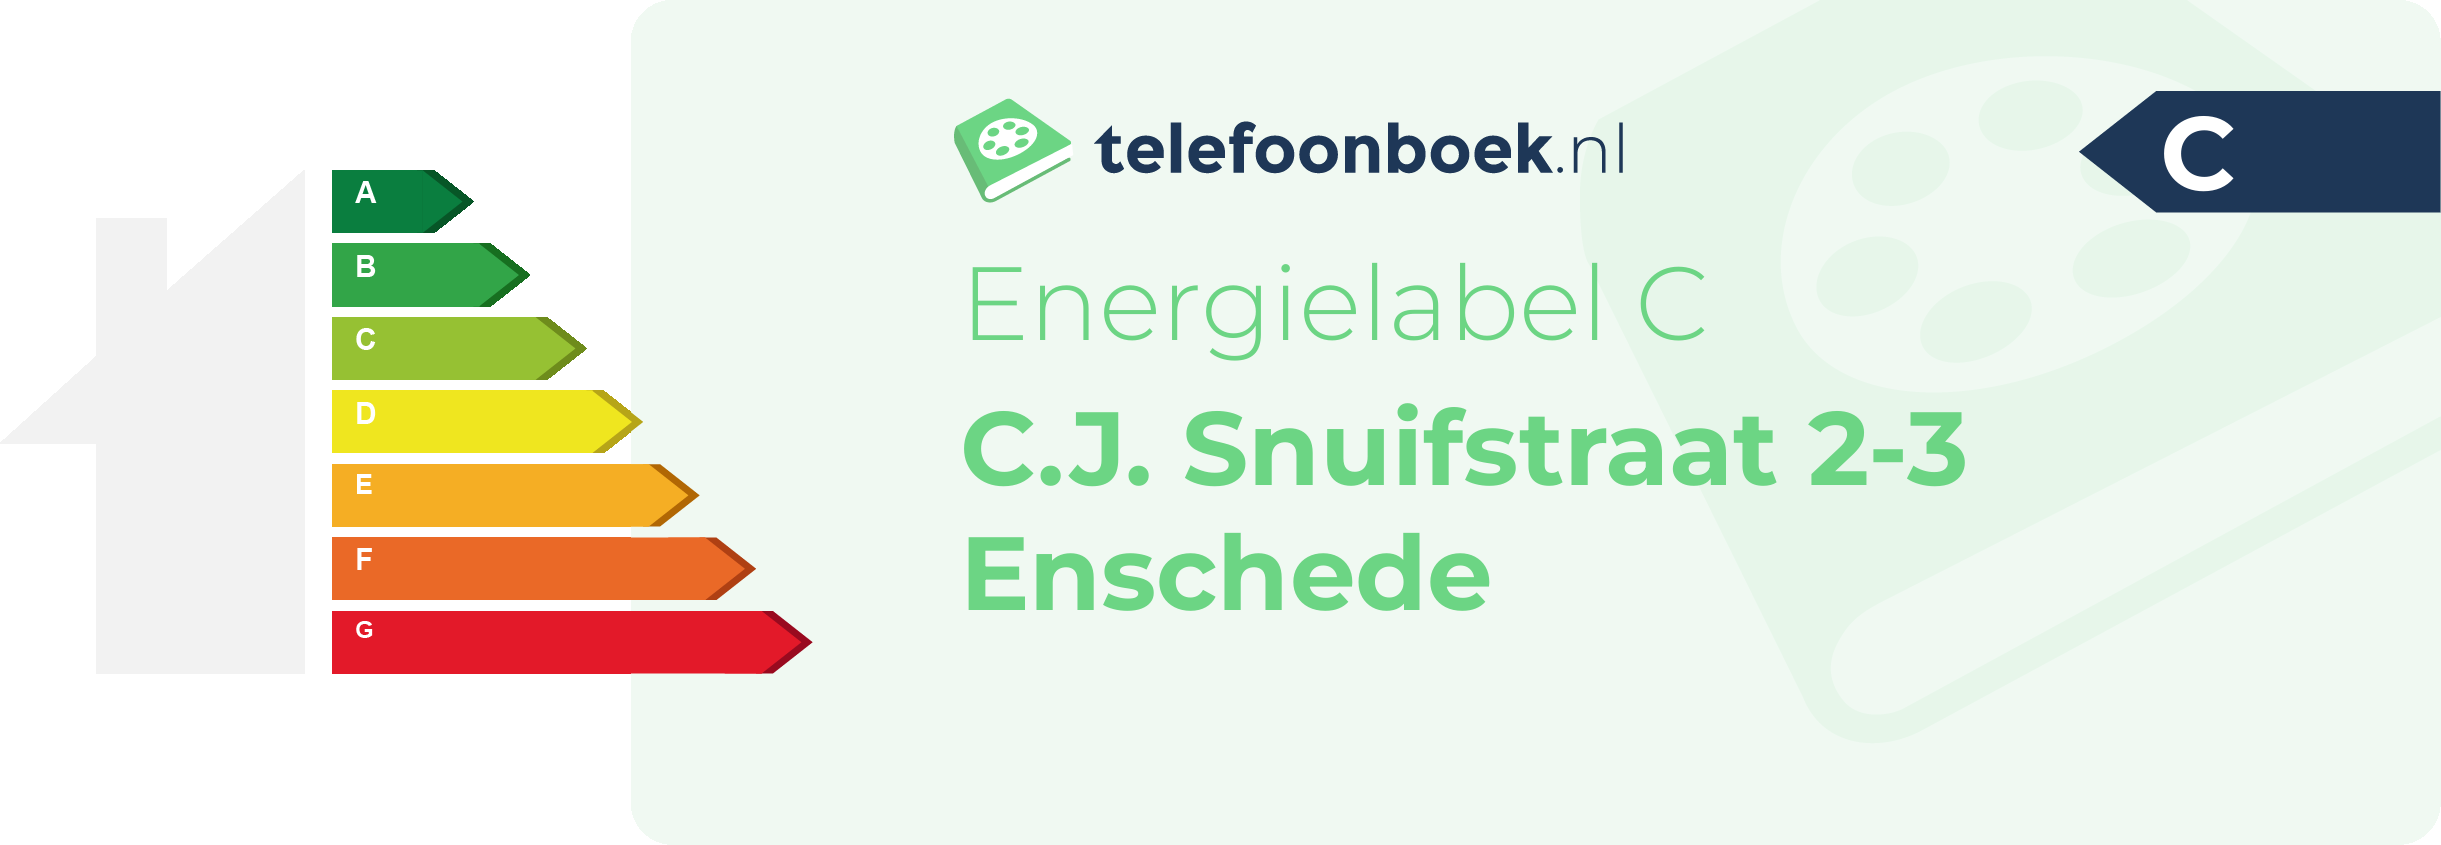 Energielabel C.J. Snuifstraat 2-3 Enschede